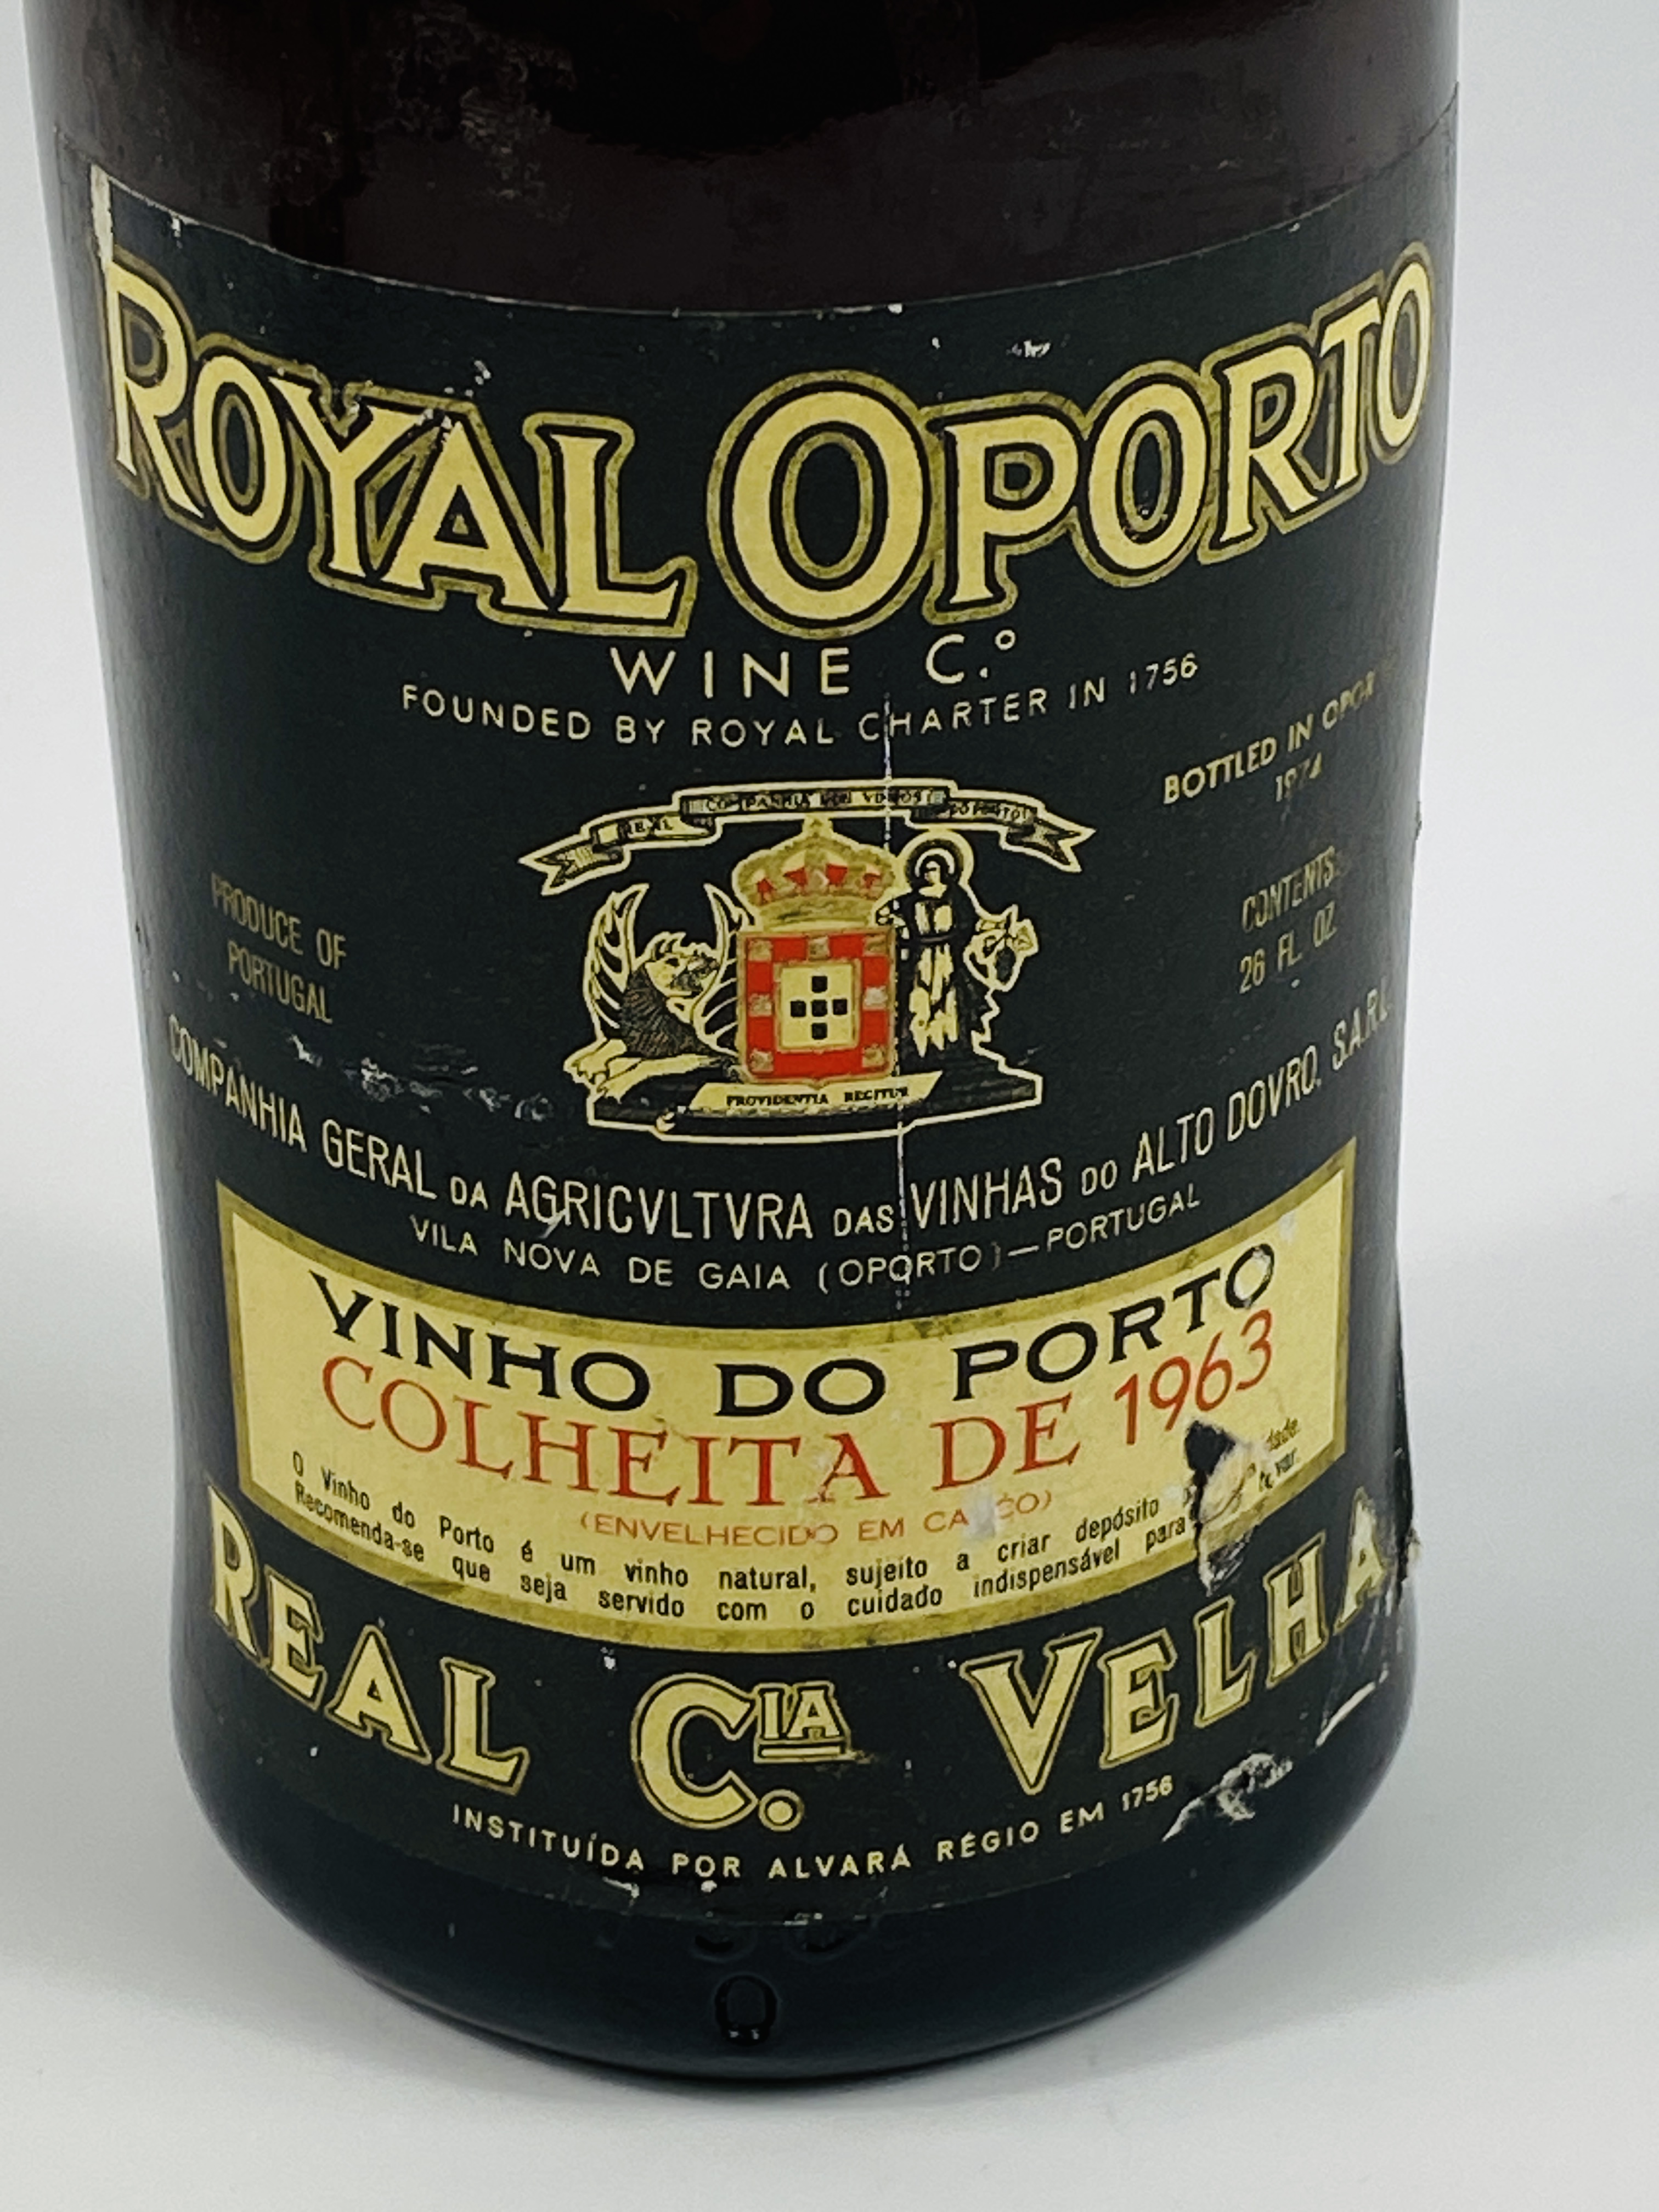 26fl oz bottle of Royal Oporto Vinho do Porto, 1963 - Image 2 of 3